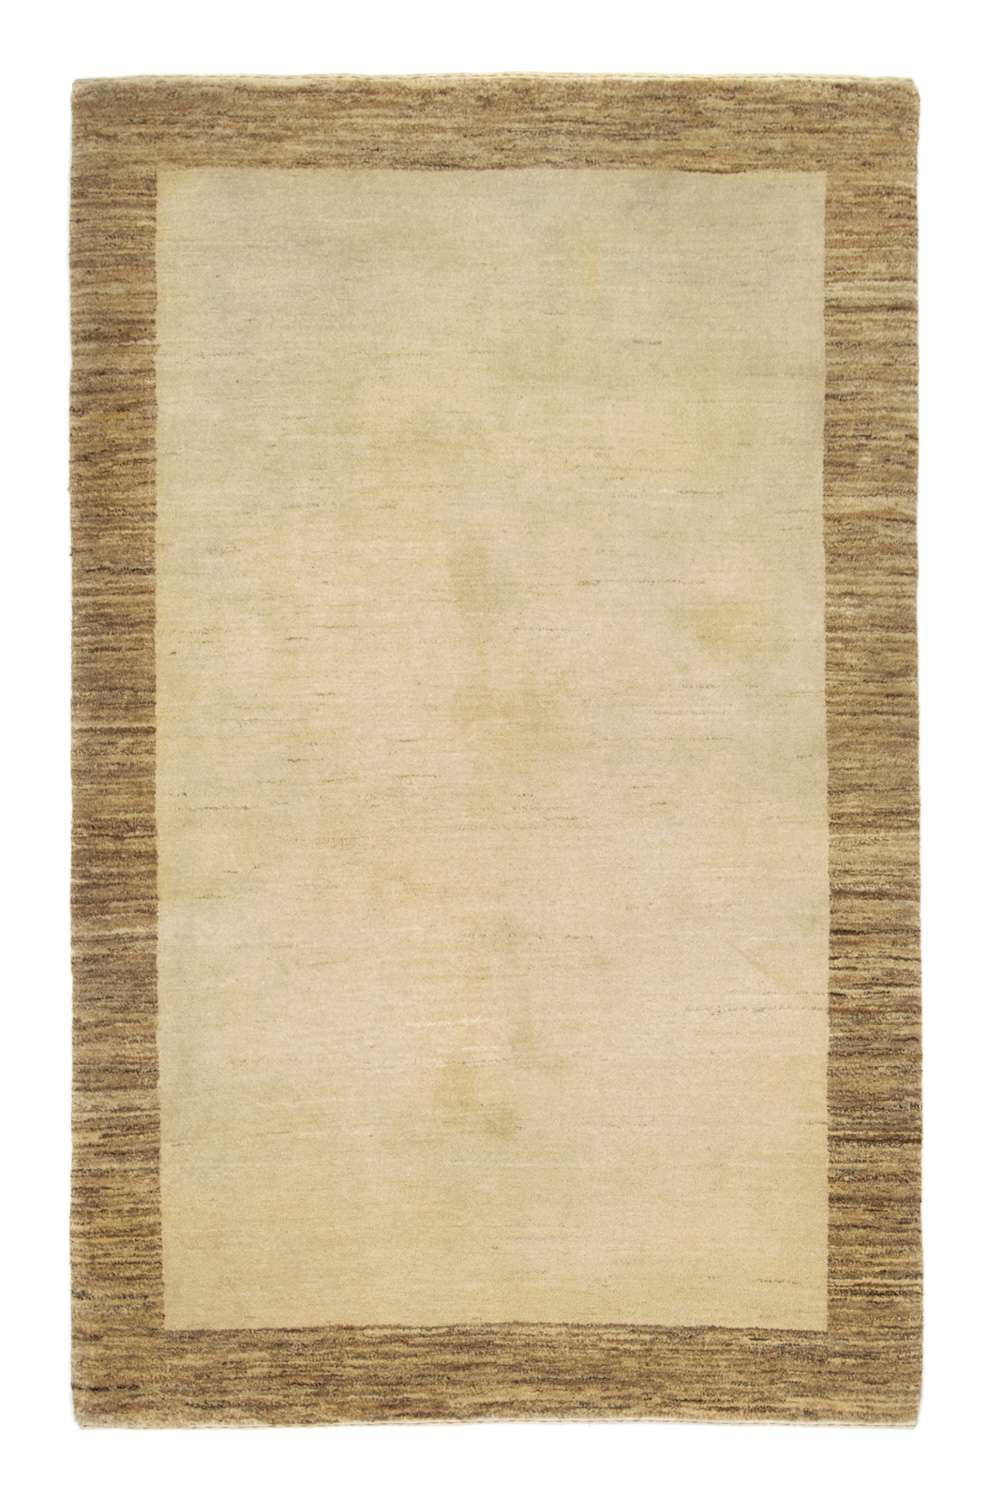 Gabbeh tapijt - Indus - 188 x 124 cm - beige